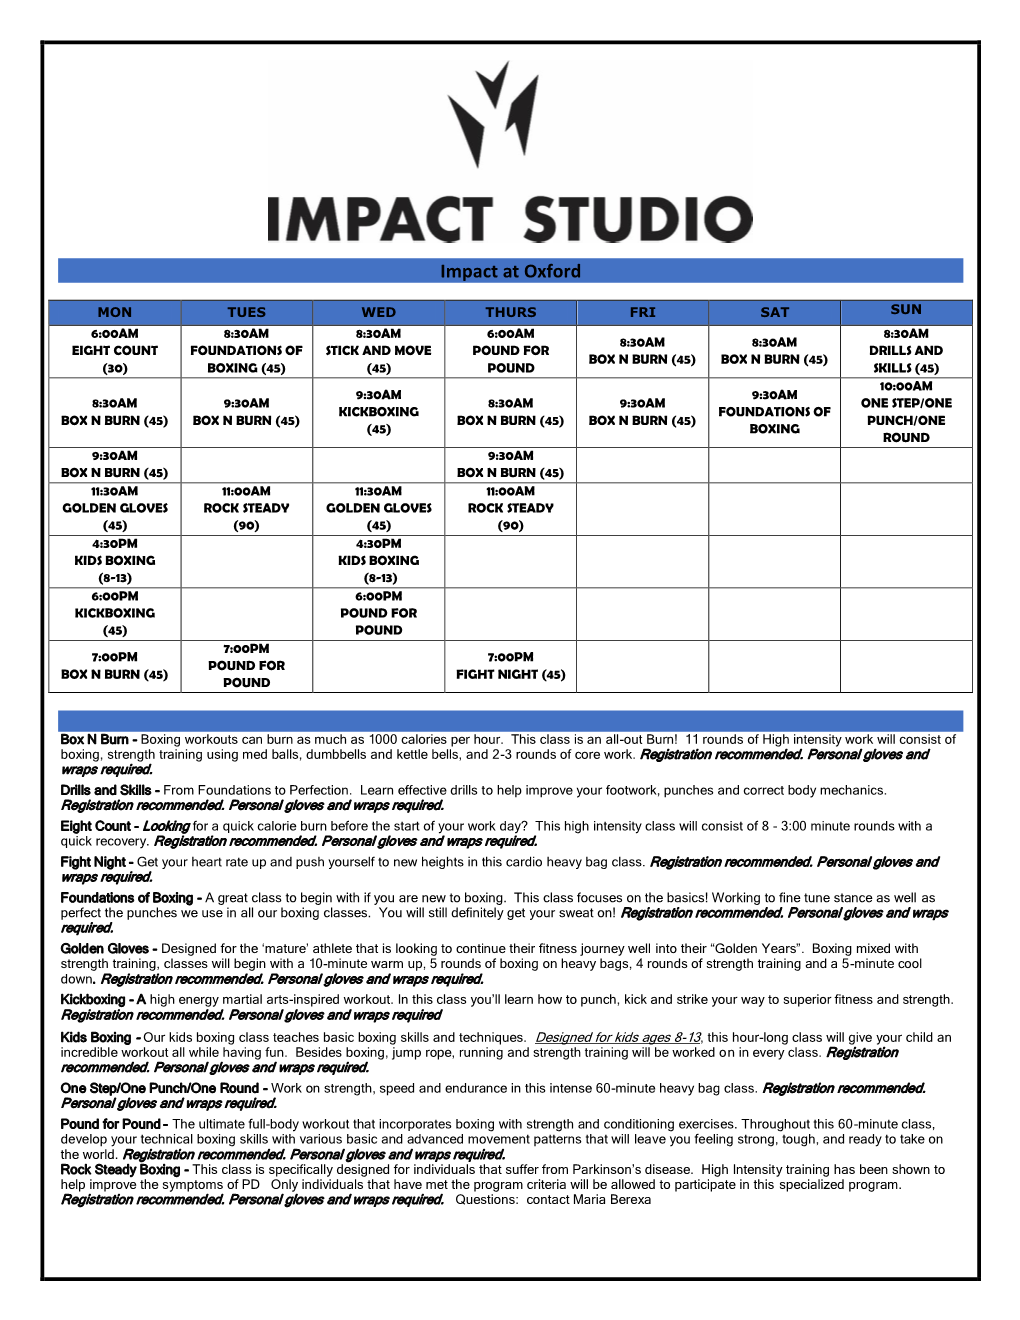 Impact-Studio-Schedule-Feb19 WEB.Pdf